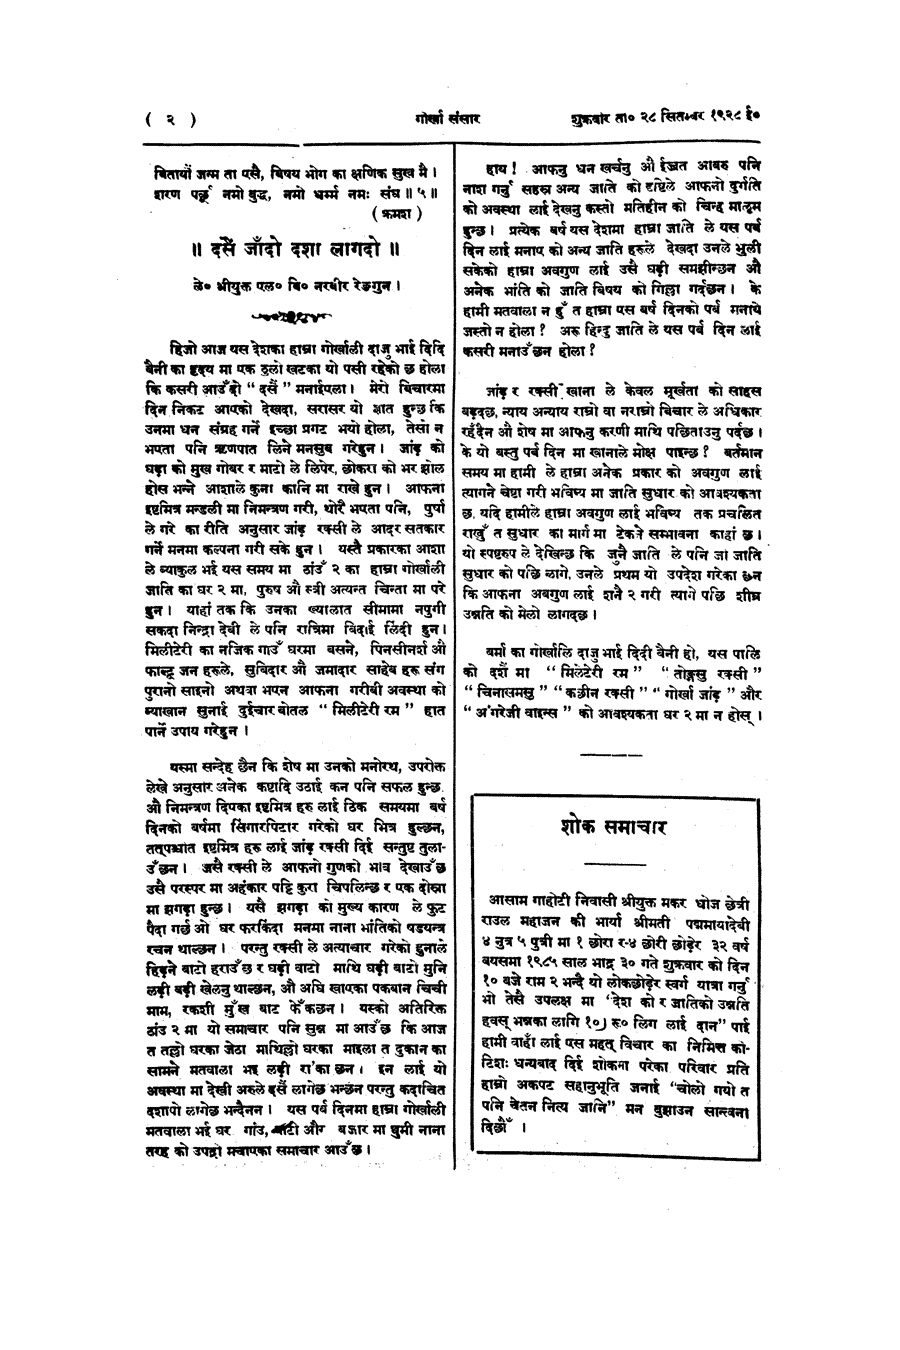 Gorkha Sansar, 28 Sept 1928, page 2